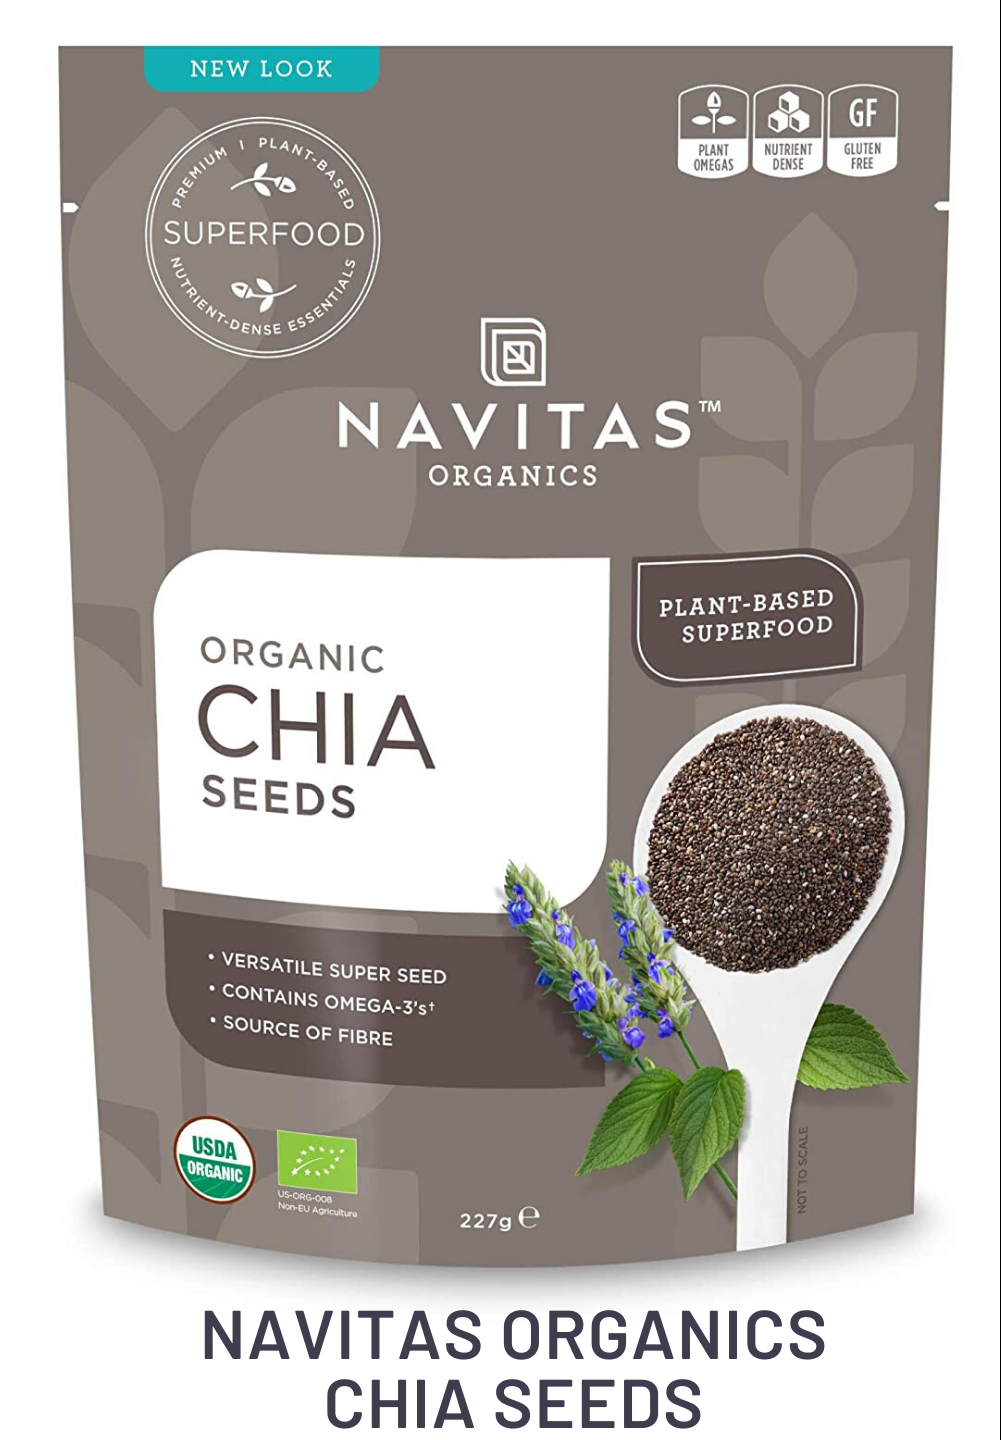 Chia seeds for weight loss - Navitas organics Chia Seeds